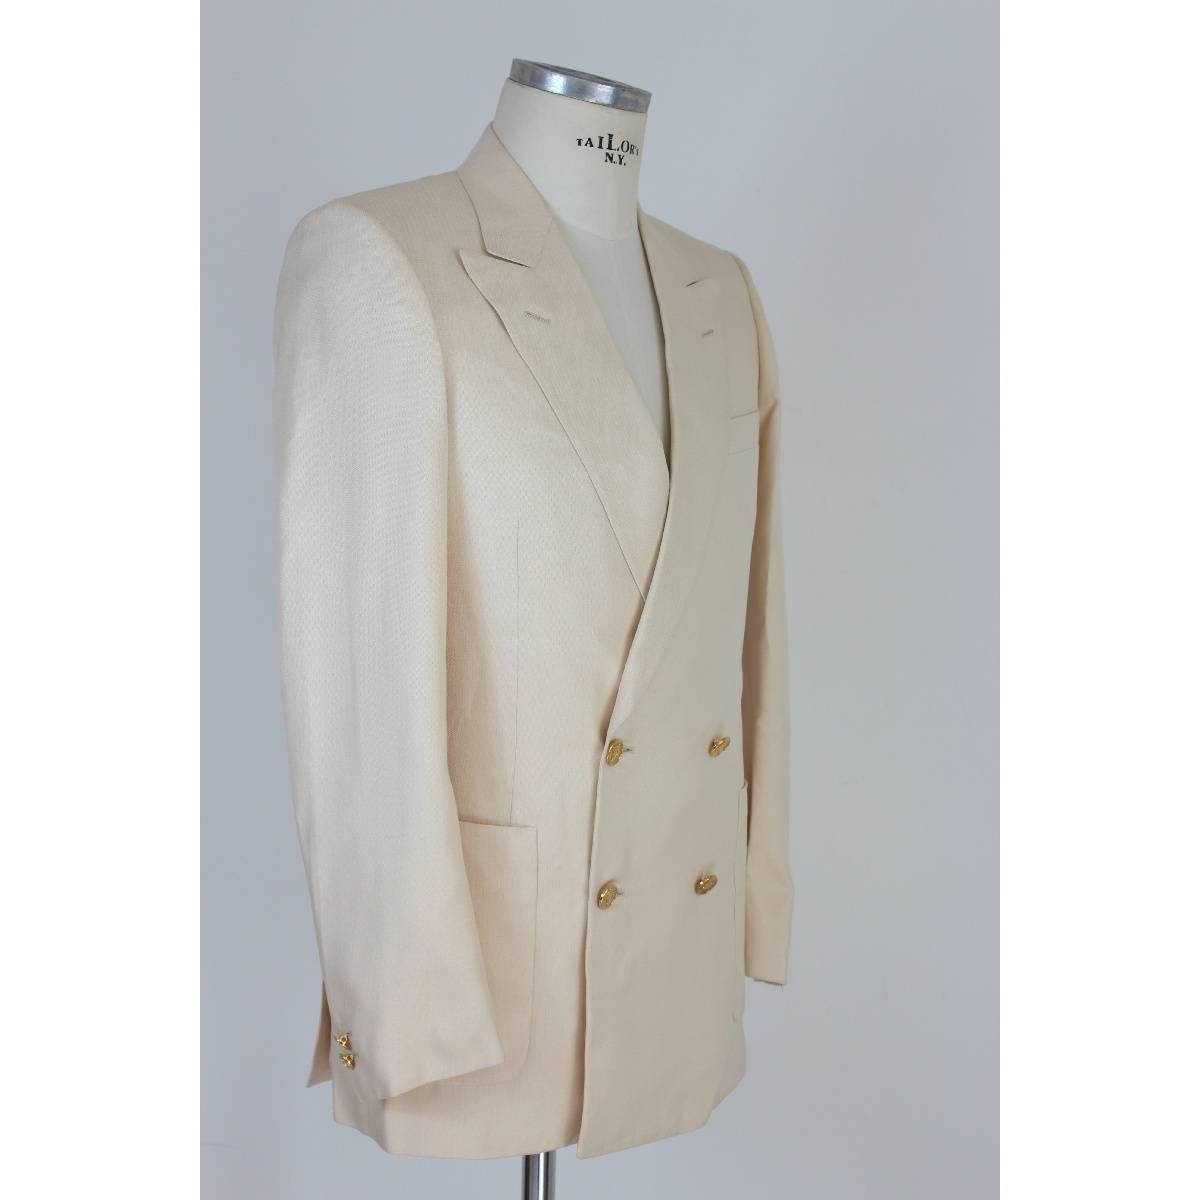 Gray Nwt Burberry vintage jacket double-breasted burlington 100% silk men’s size 46 i